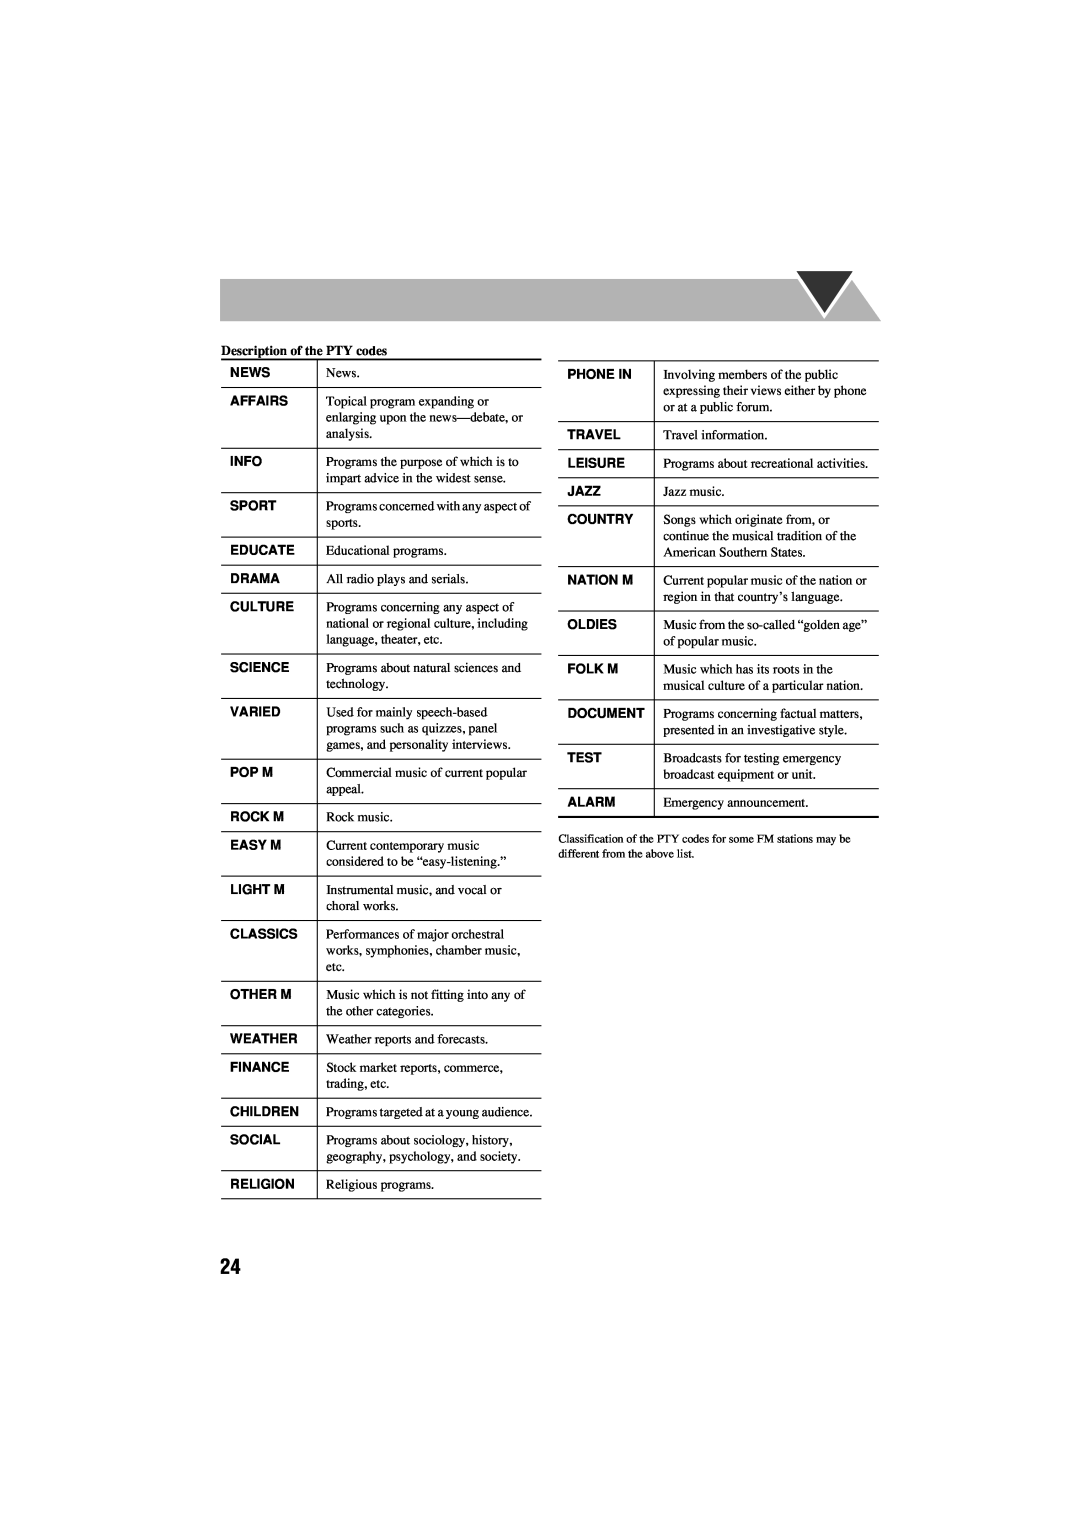 JVC GVT0125-003A manual Description of the PTY codes, News 